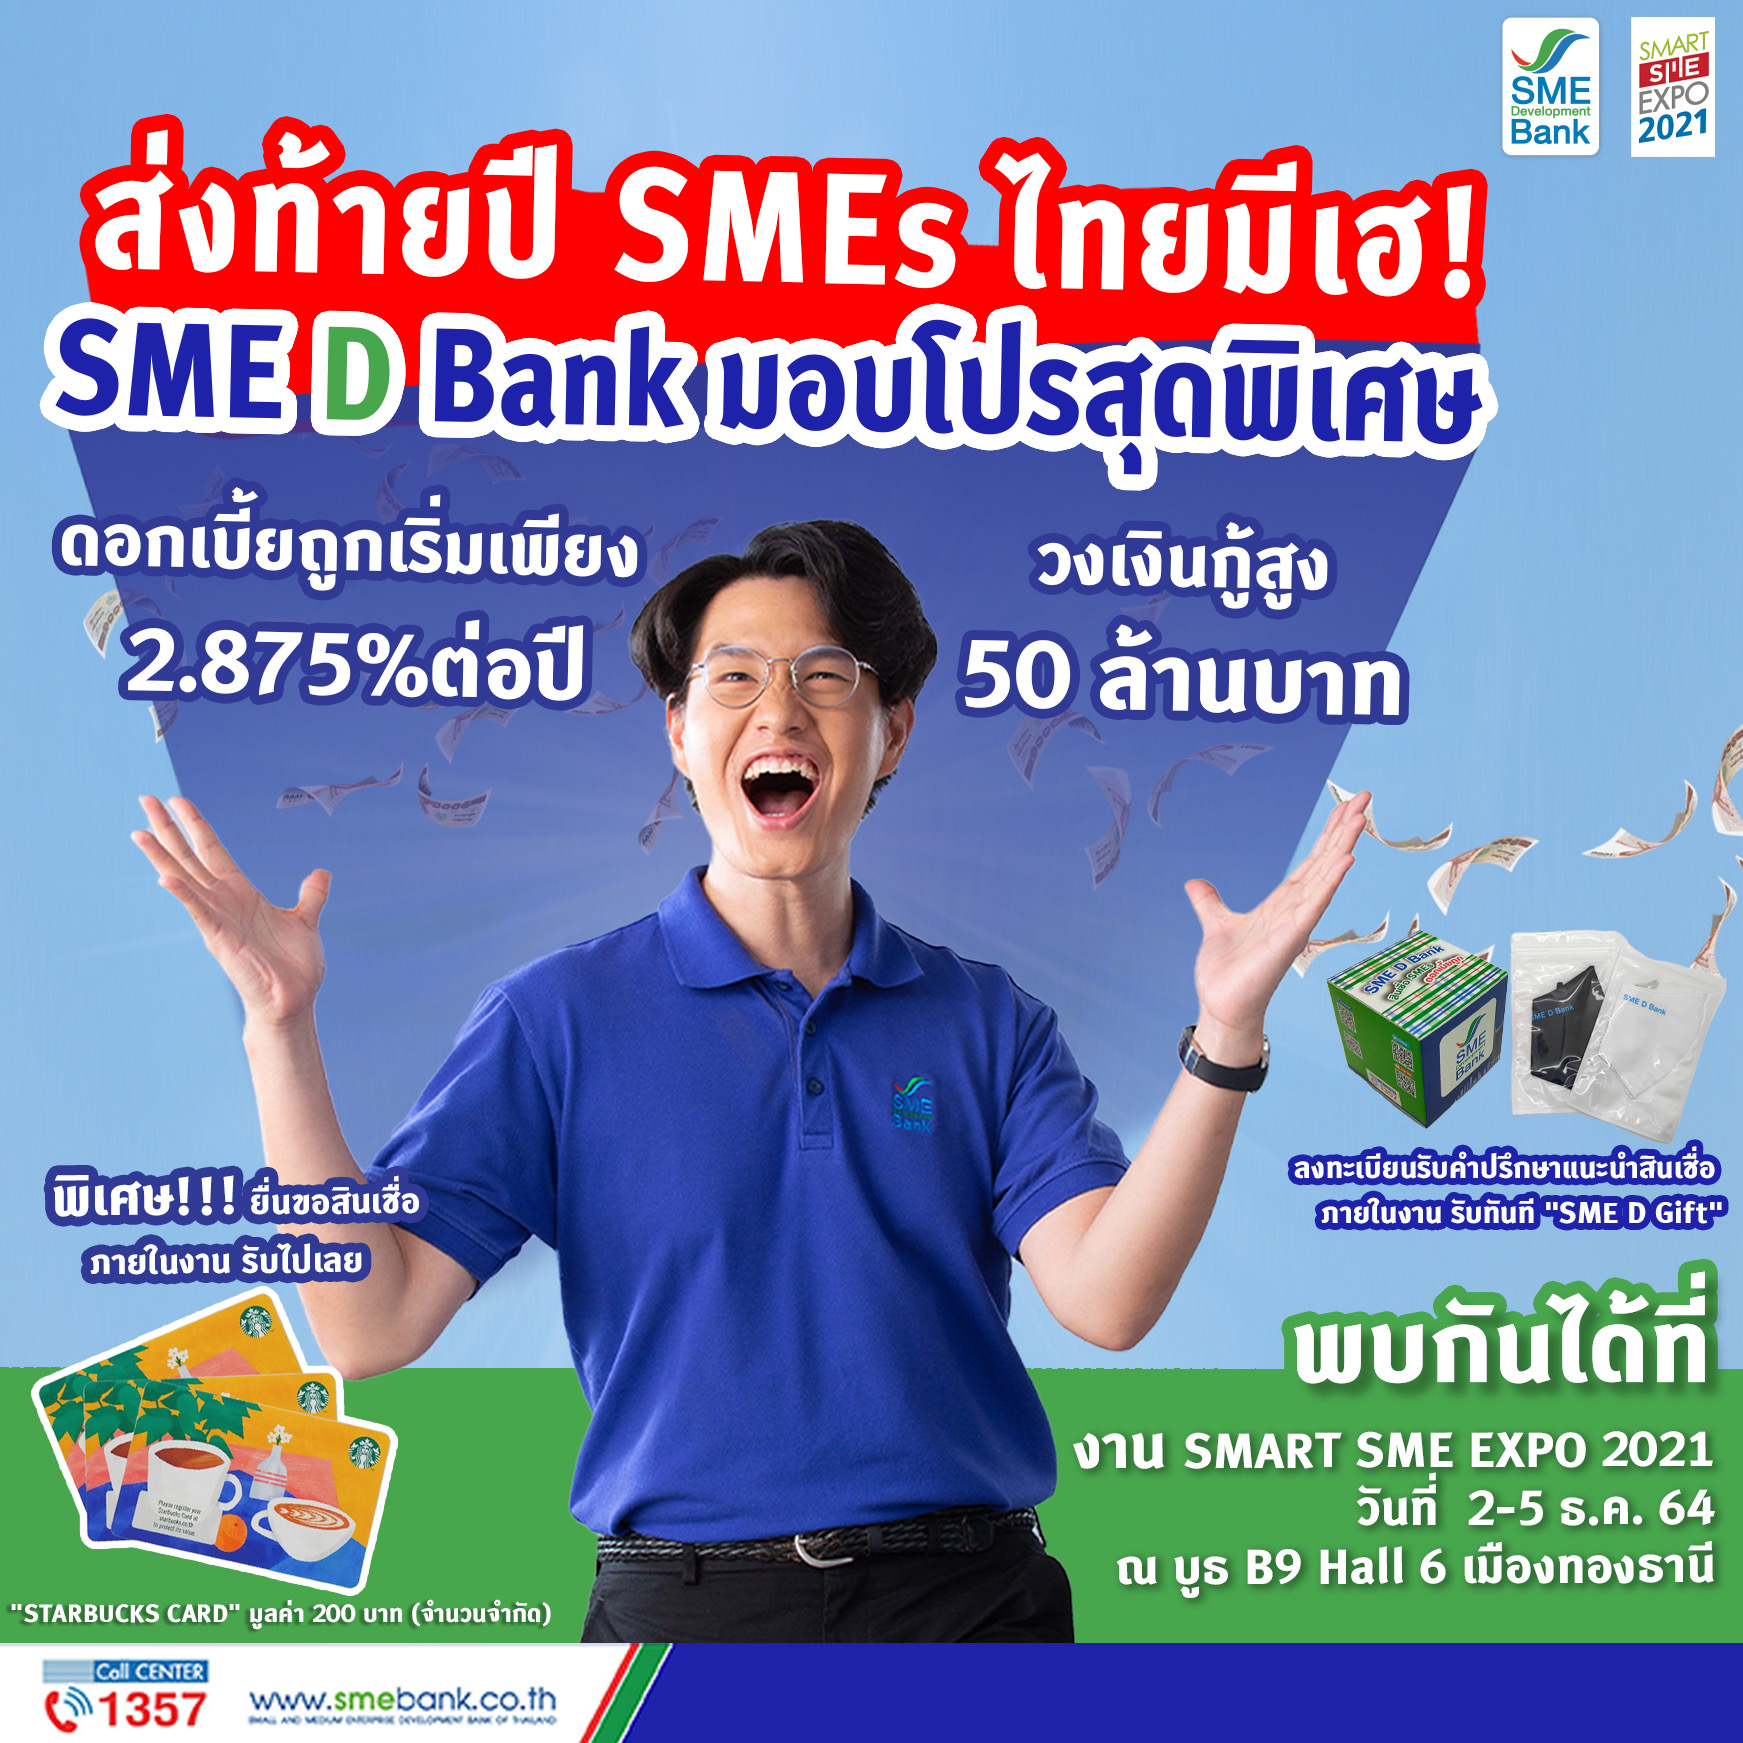 SME D Bank จัดเต็มสินเชื่อดอกเบี้ยต่ำ งาน ‘SMART SME EXPO 2021’ กู้สูงถึง 50ลบ.